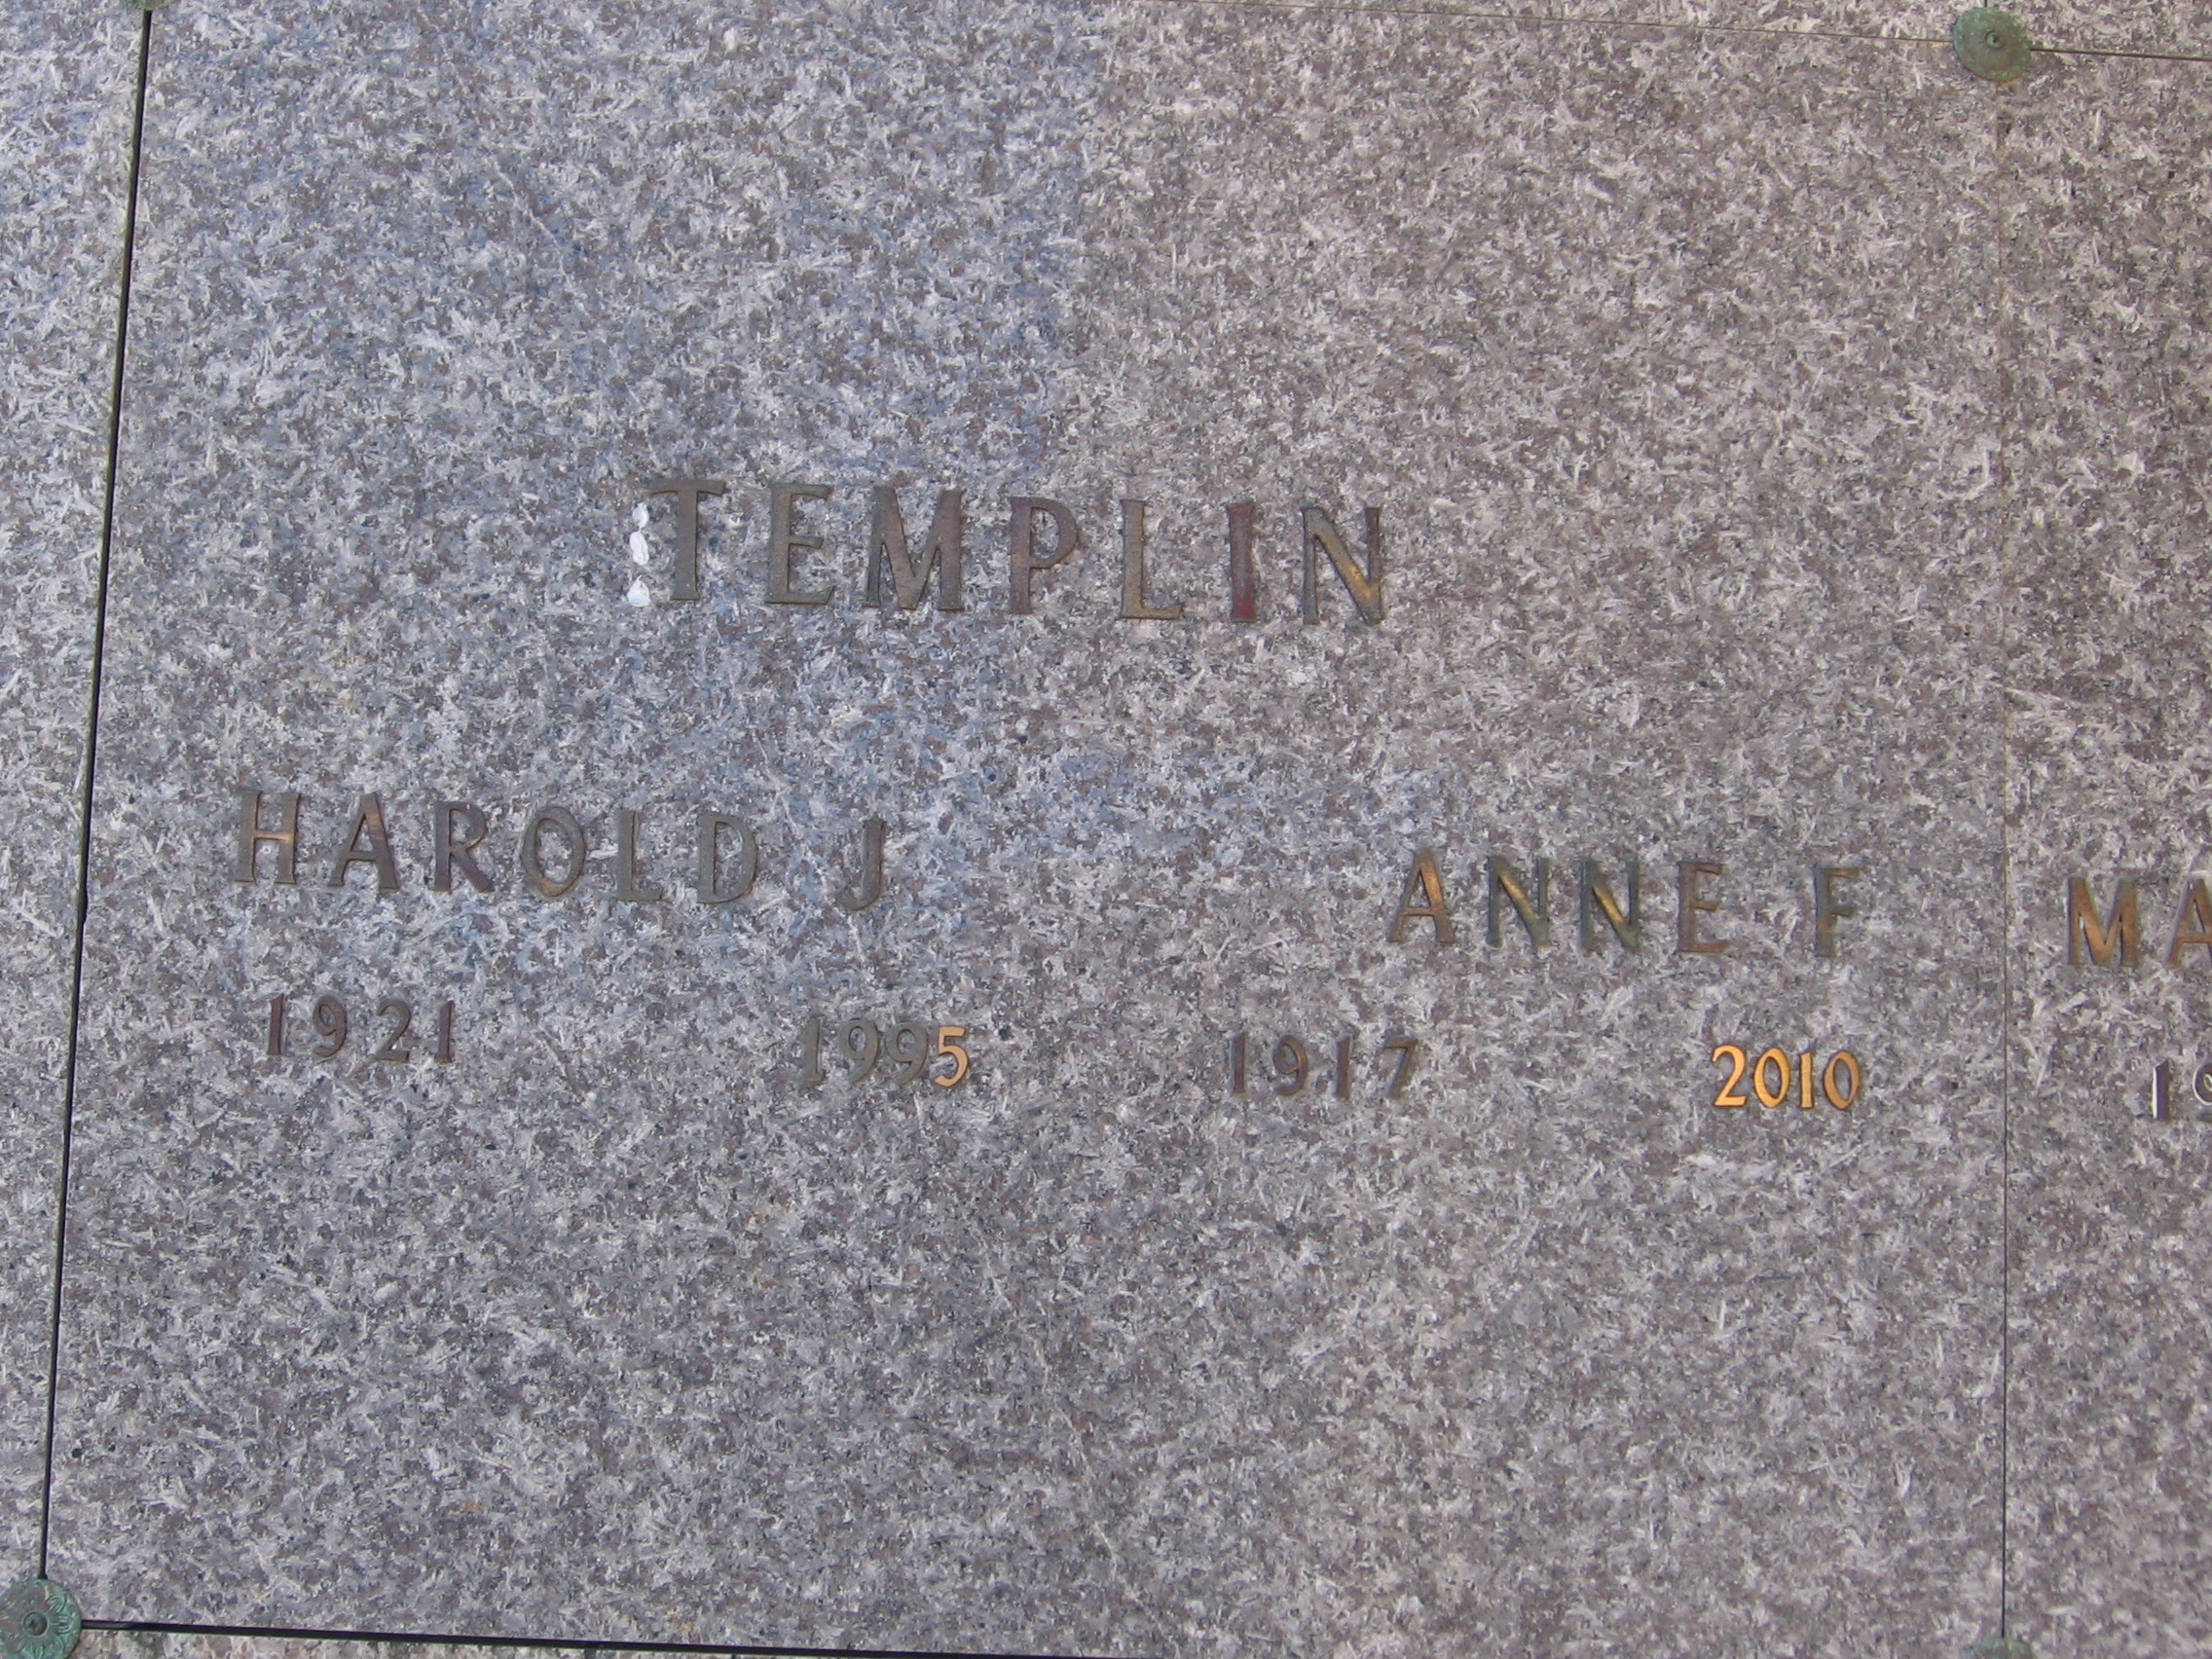 Anne F Templin